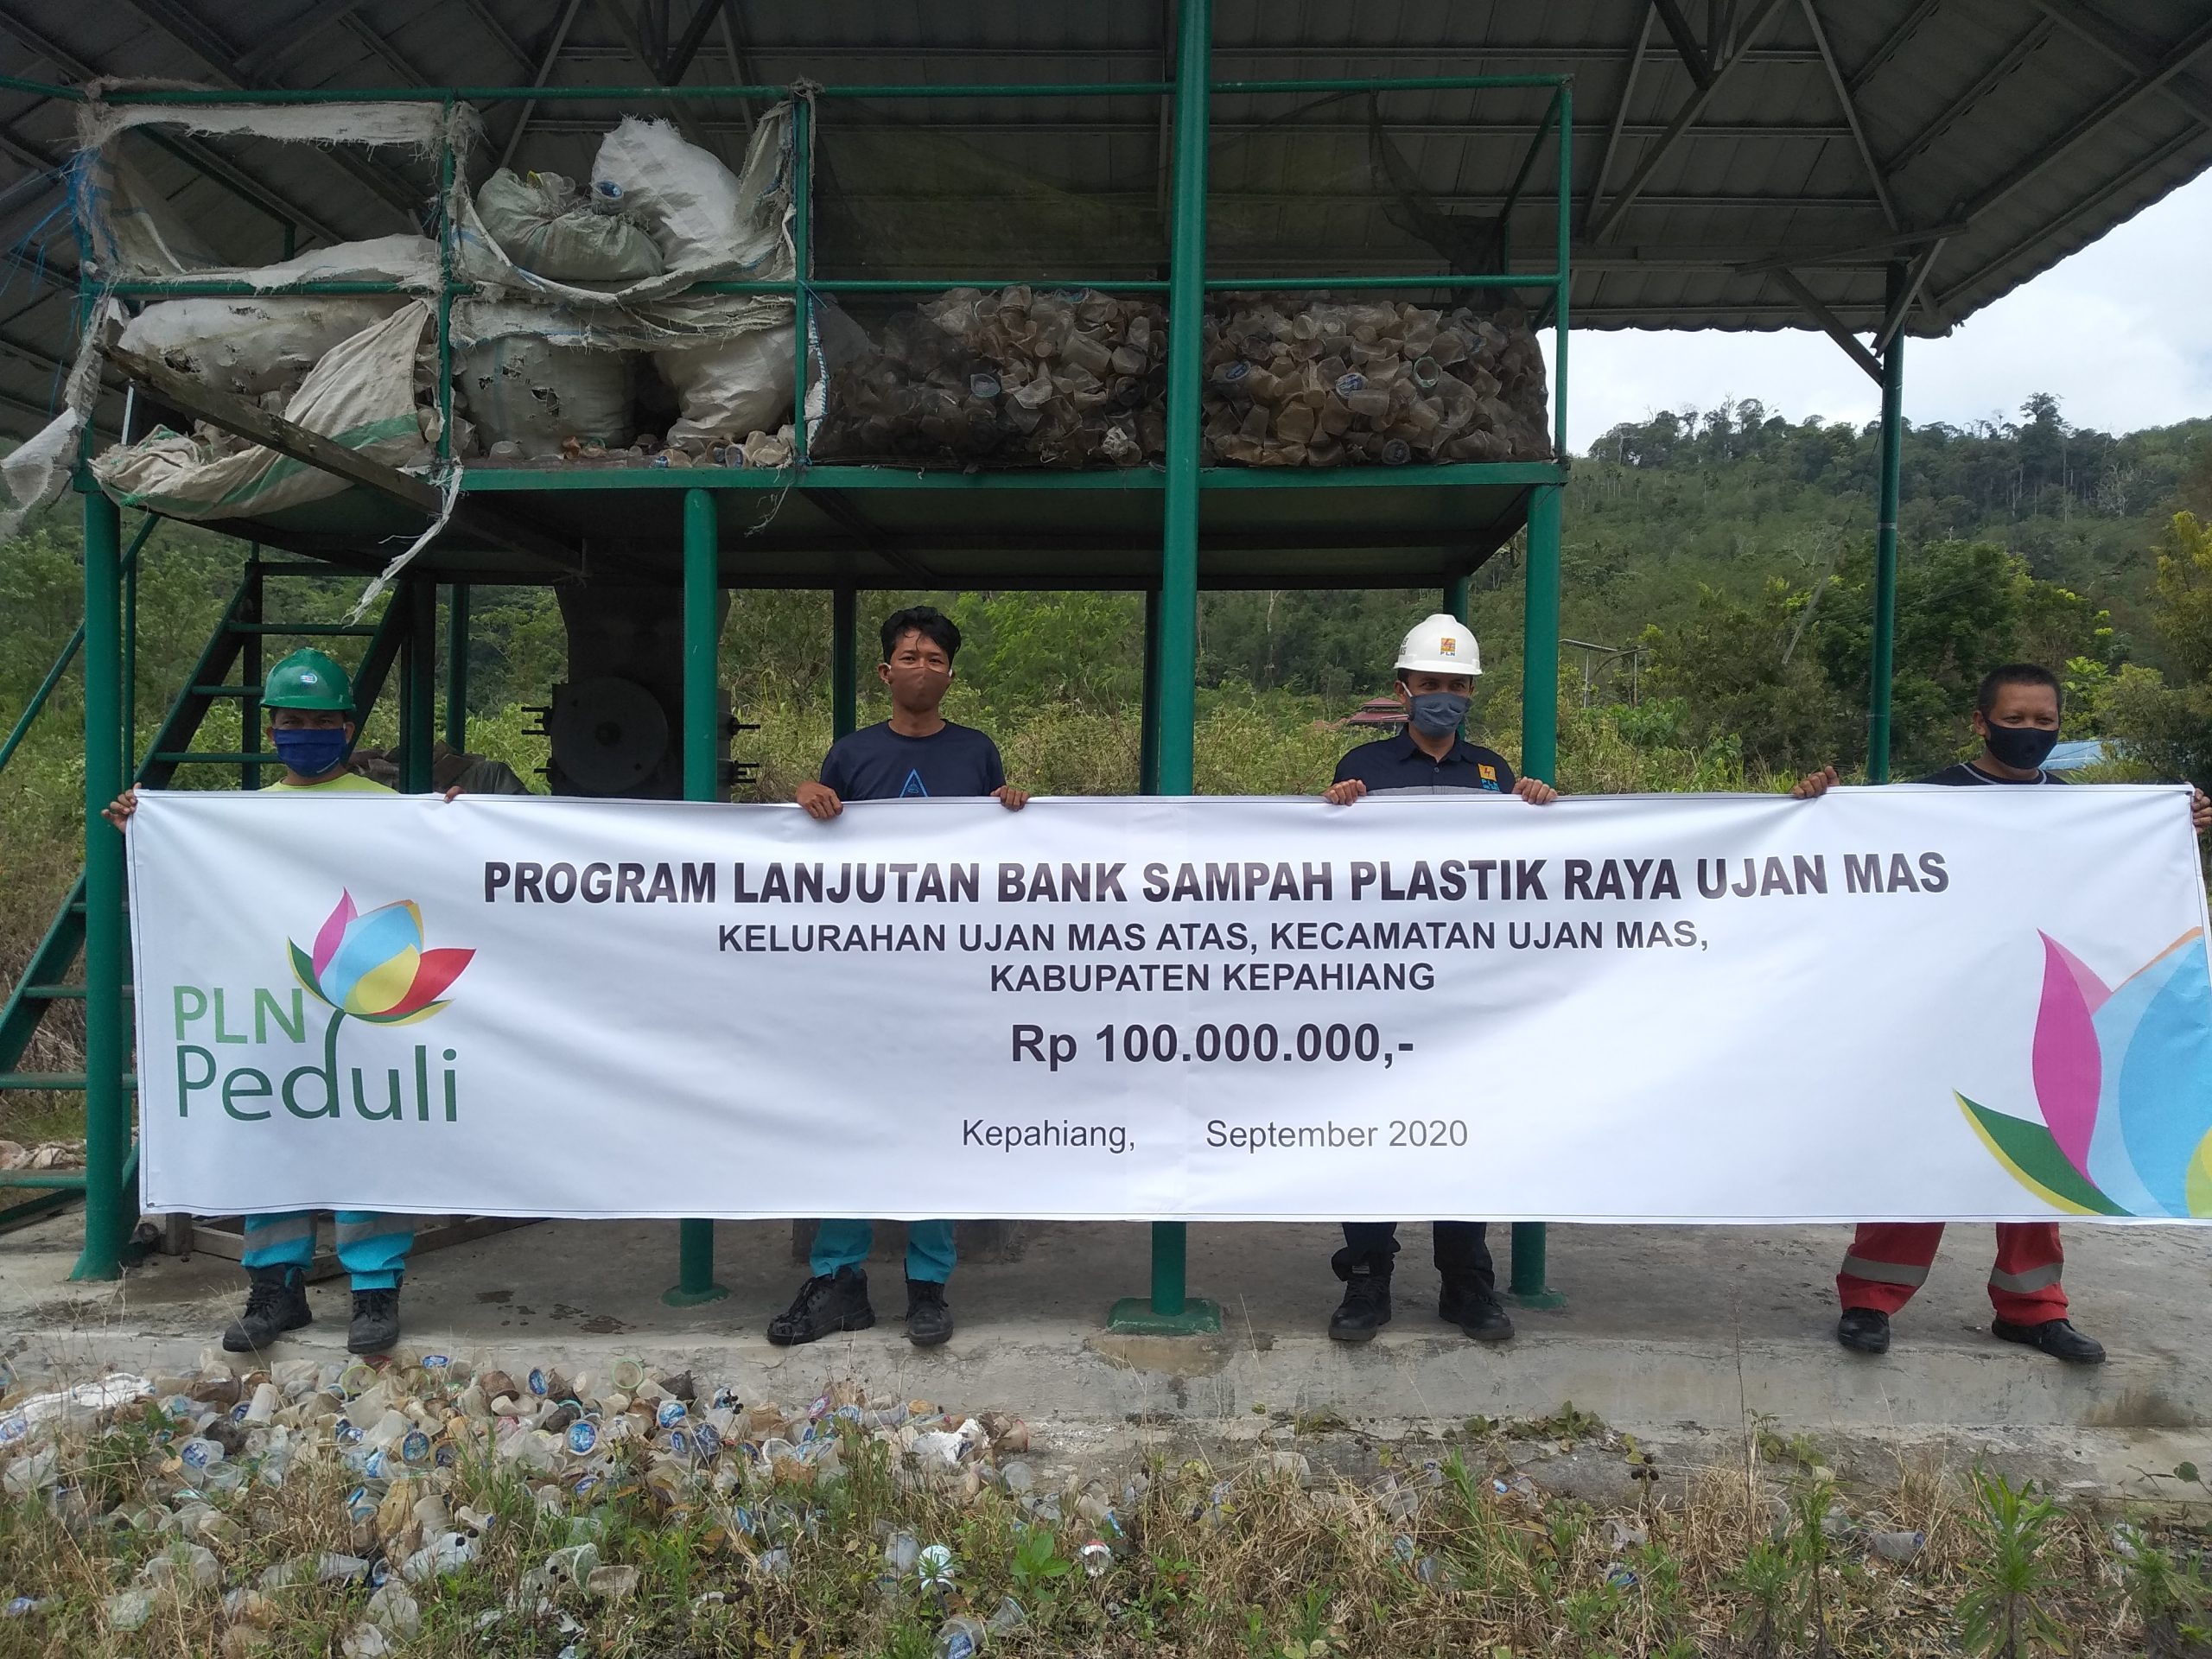 PLTA Musi Serahkan Bantuan Program Lanjutan Bank Sampah Plastik Raya Ujan Mas